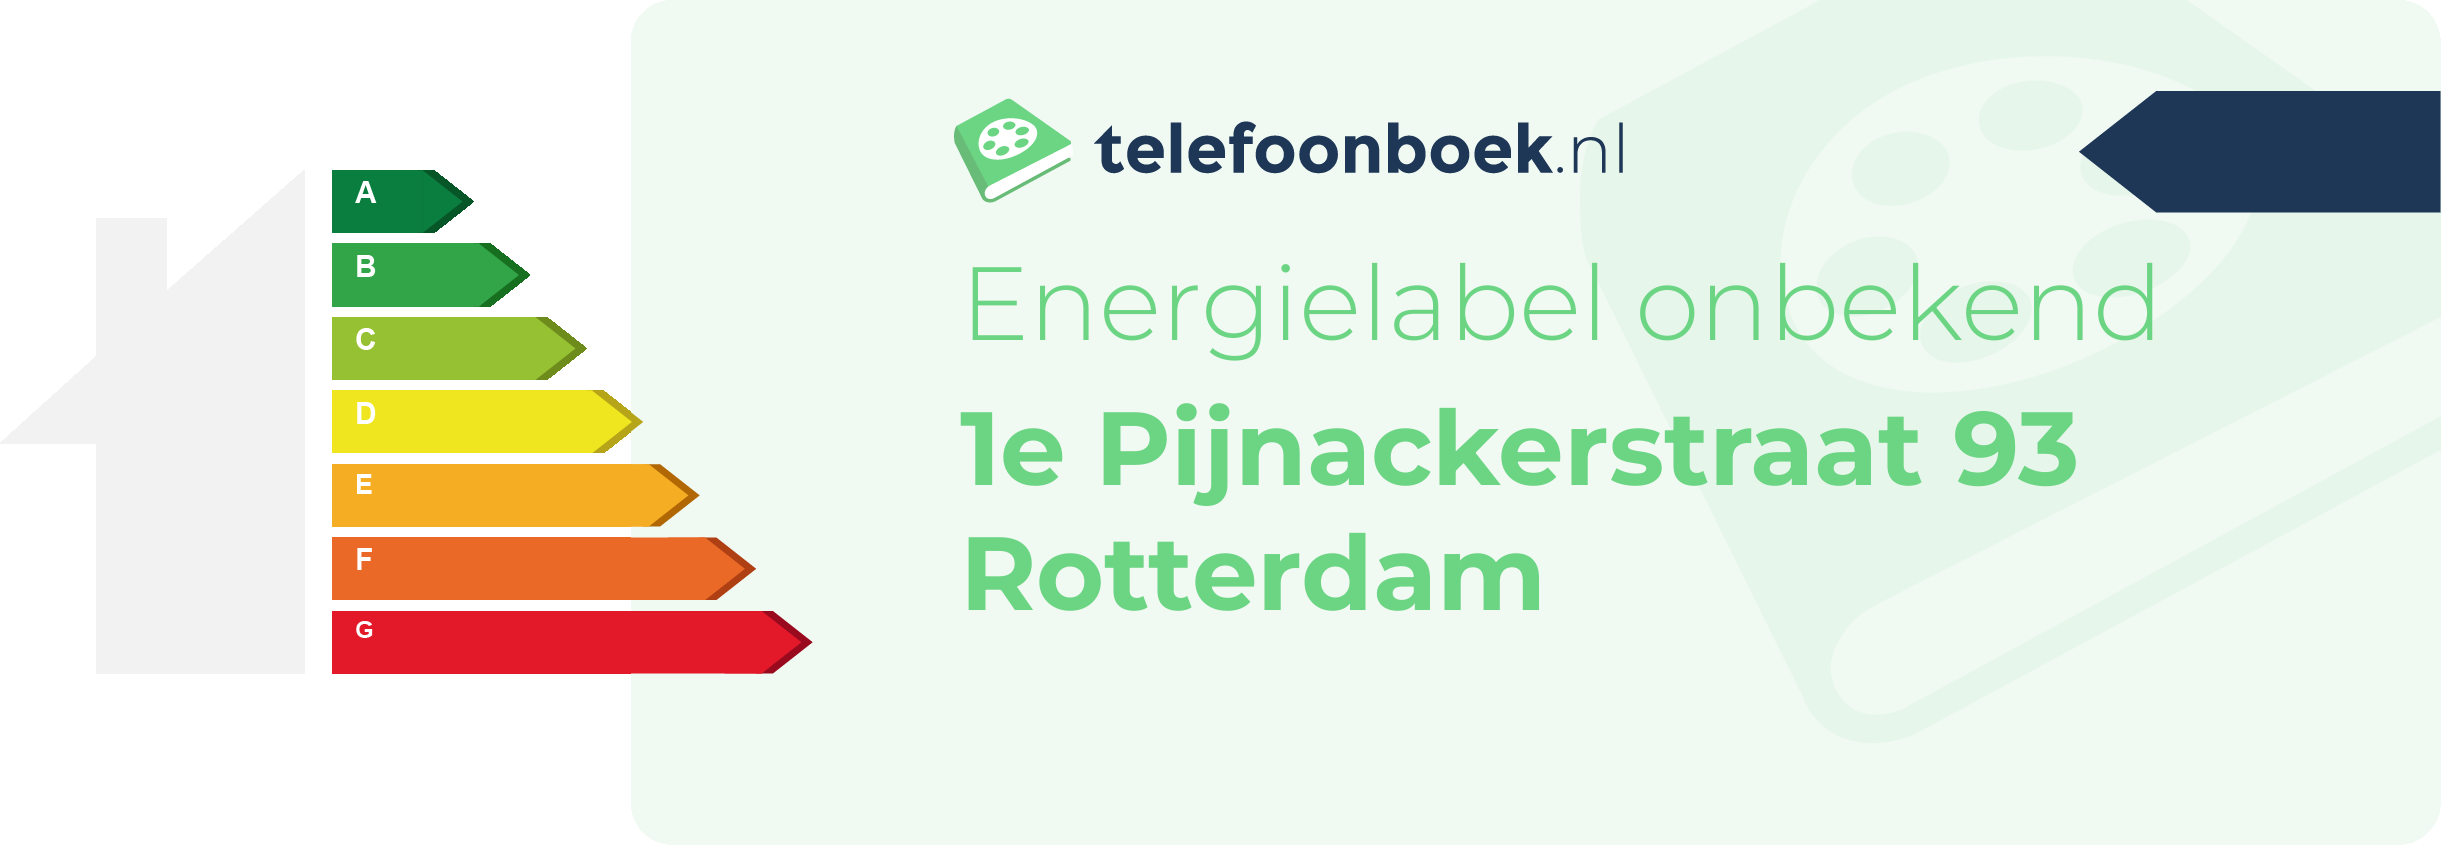 Energielabel 1e Pijnackerstraat 93 Rotterdam